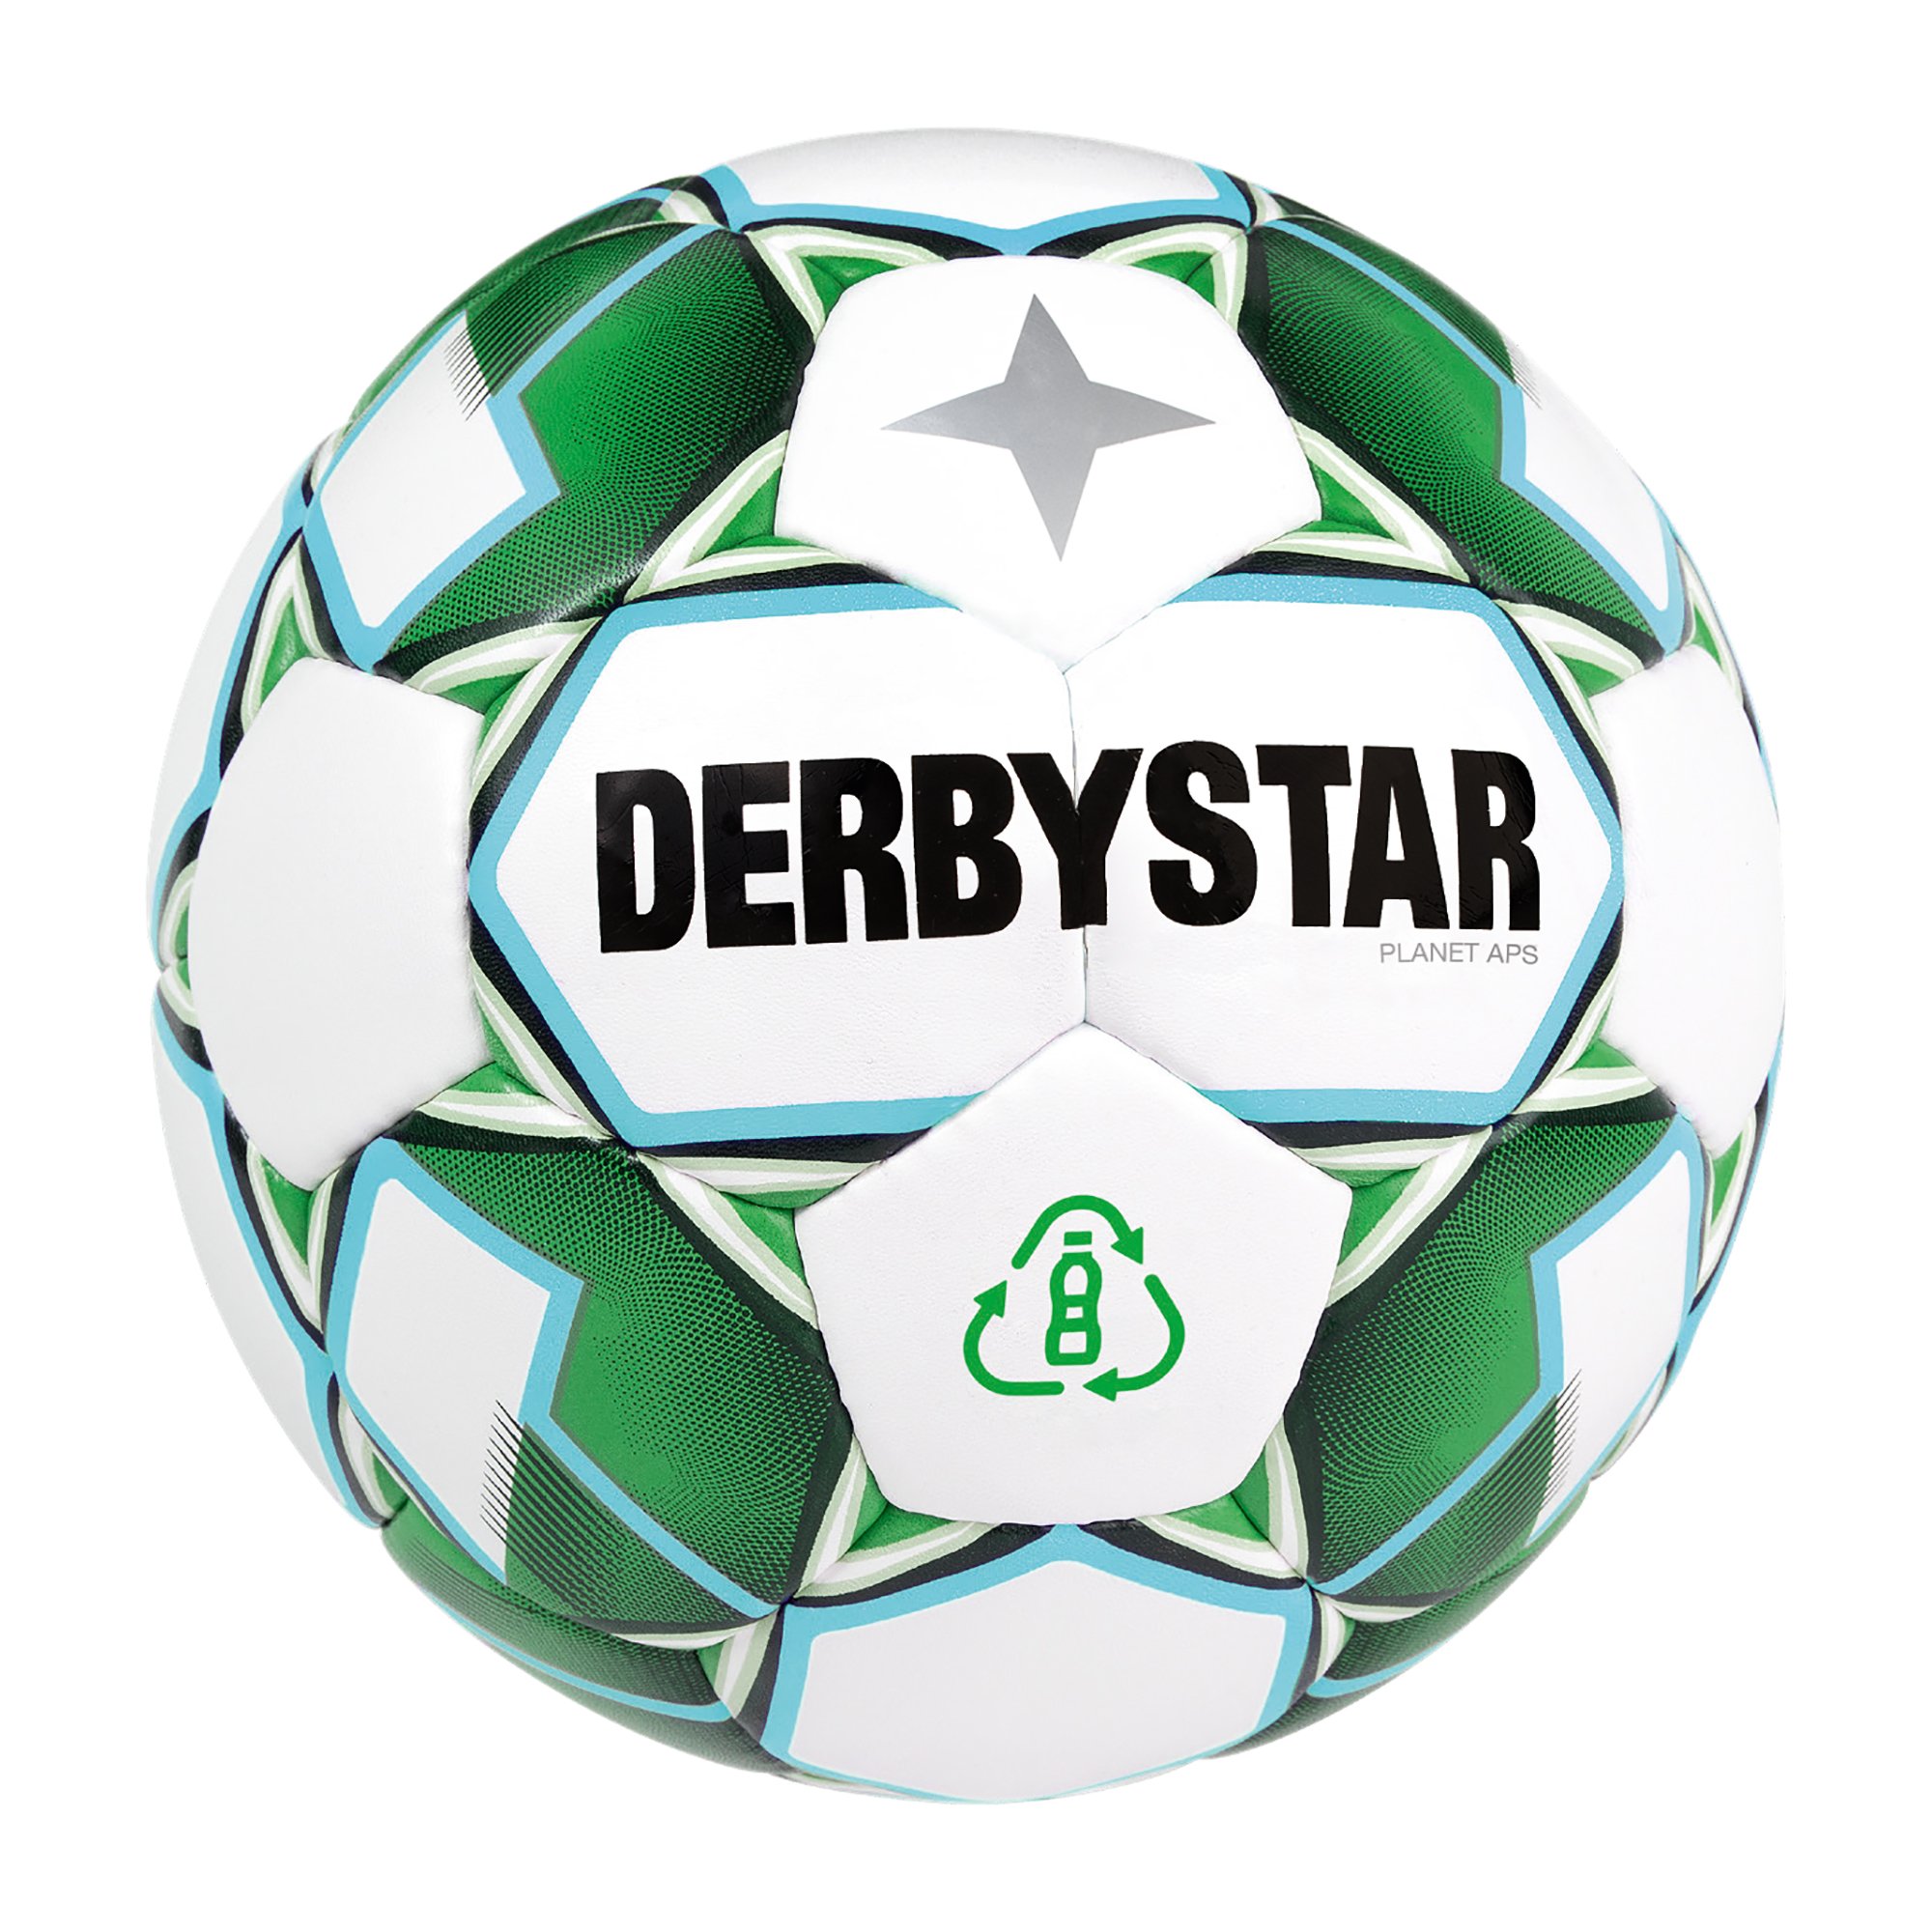 Derbystar Planet APS v21